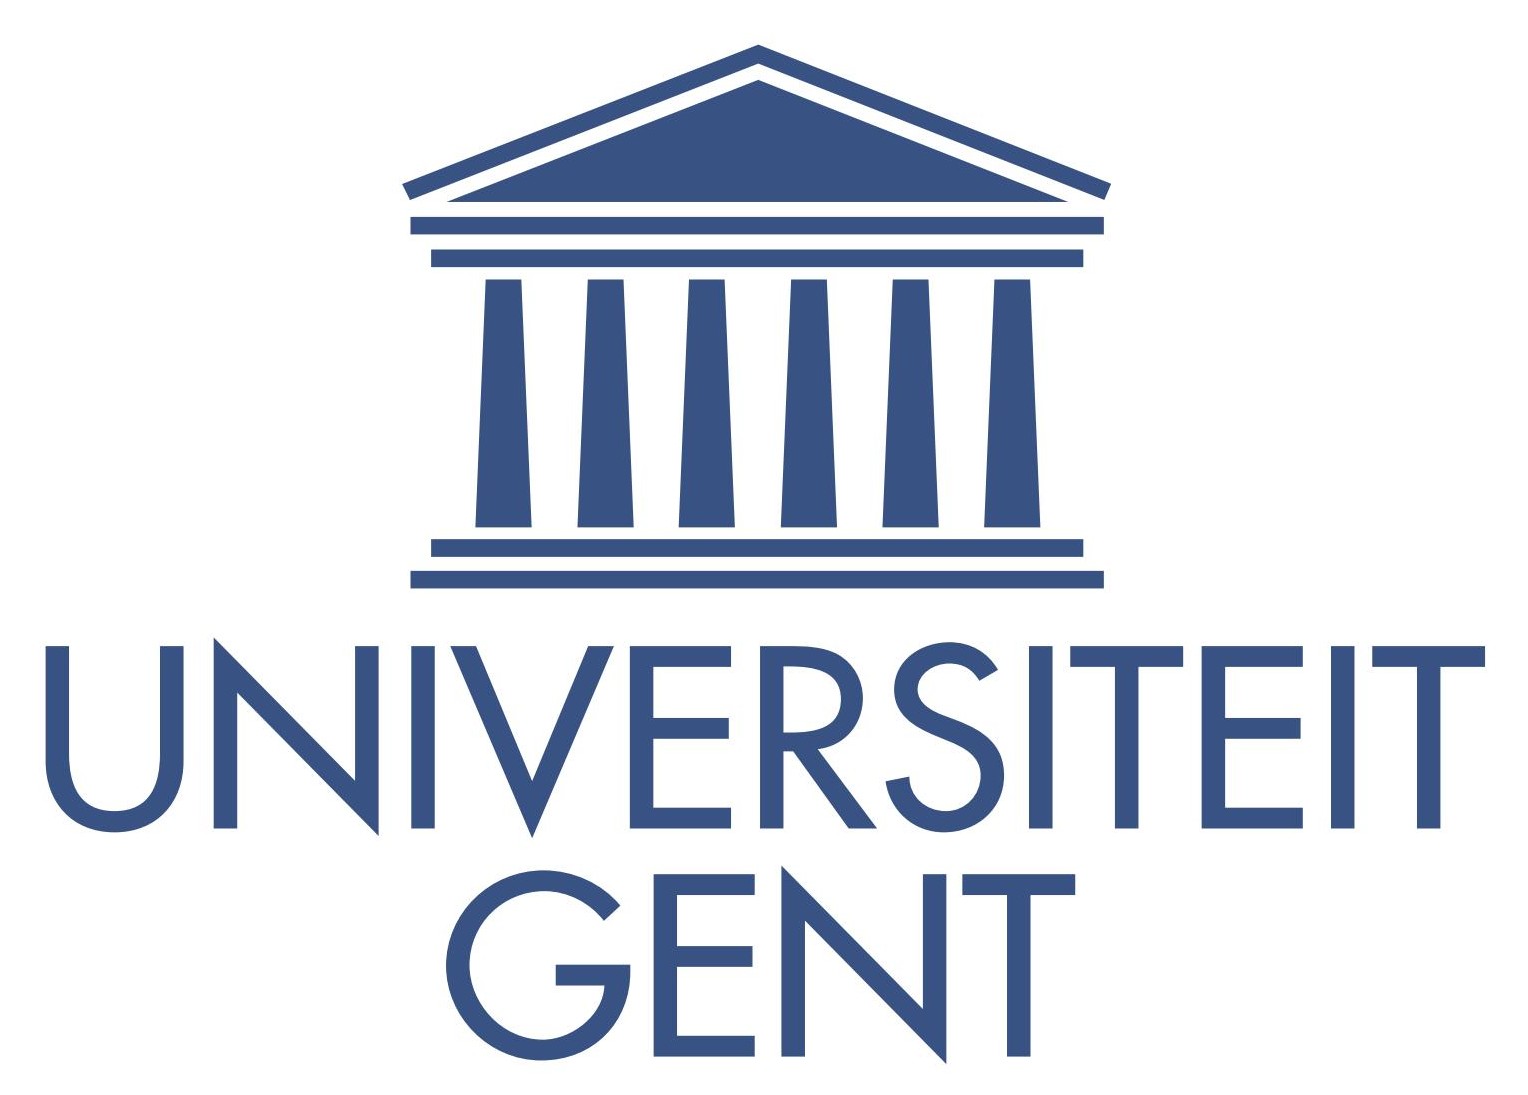 ghent university logo 09